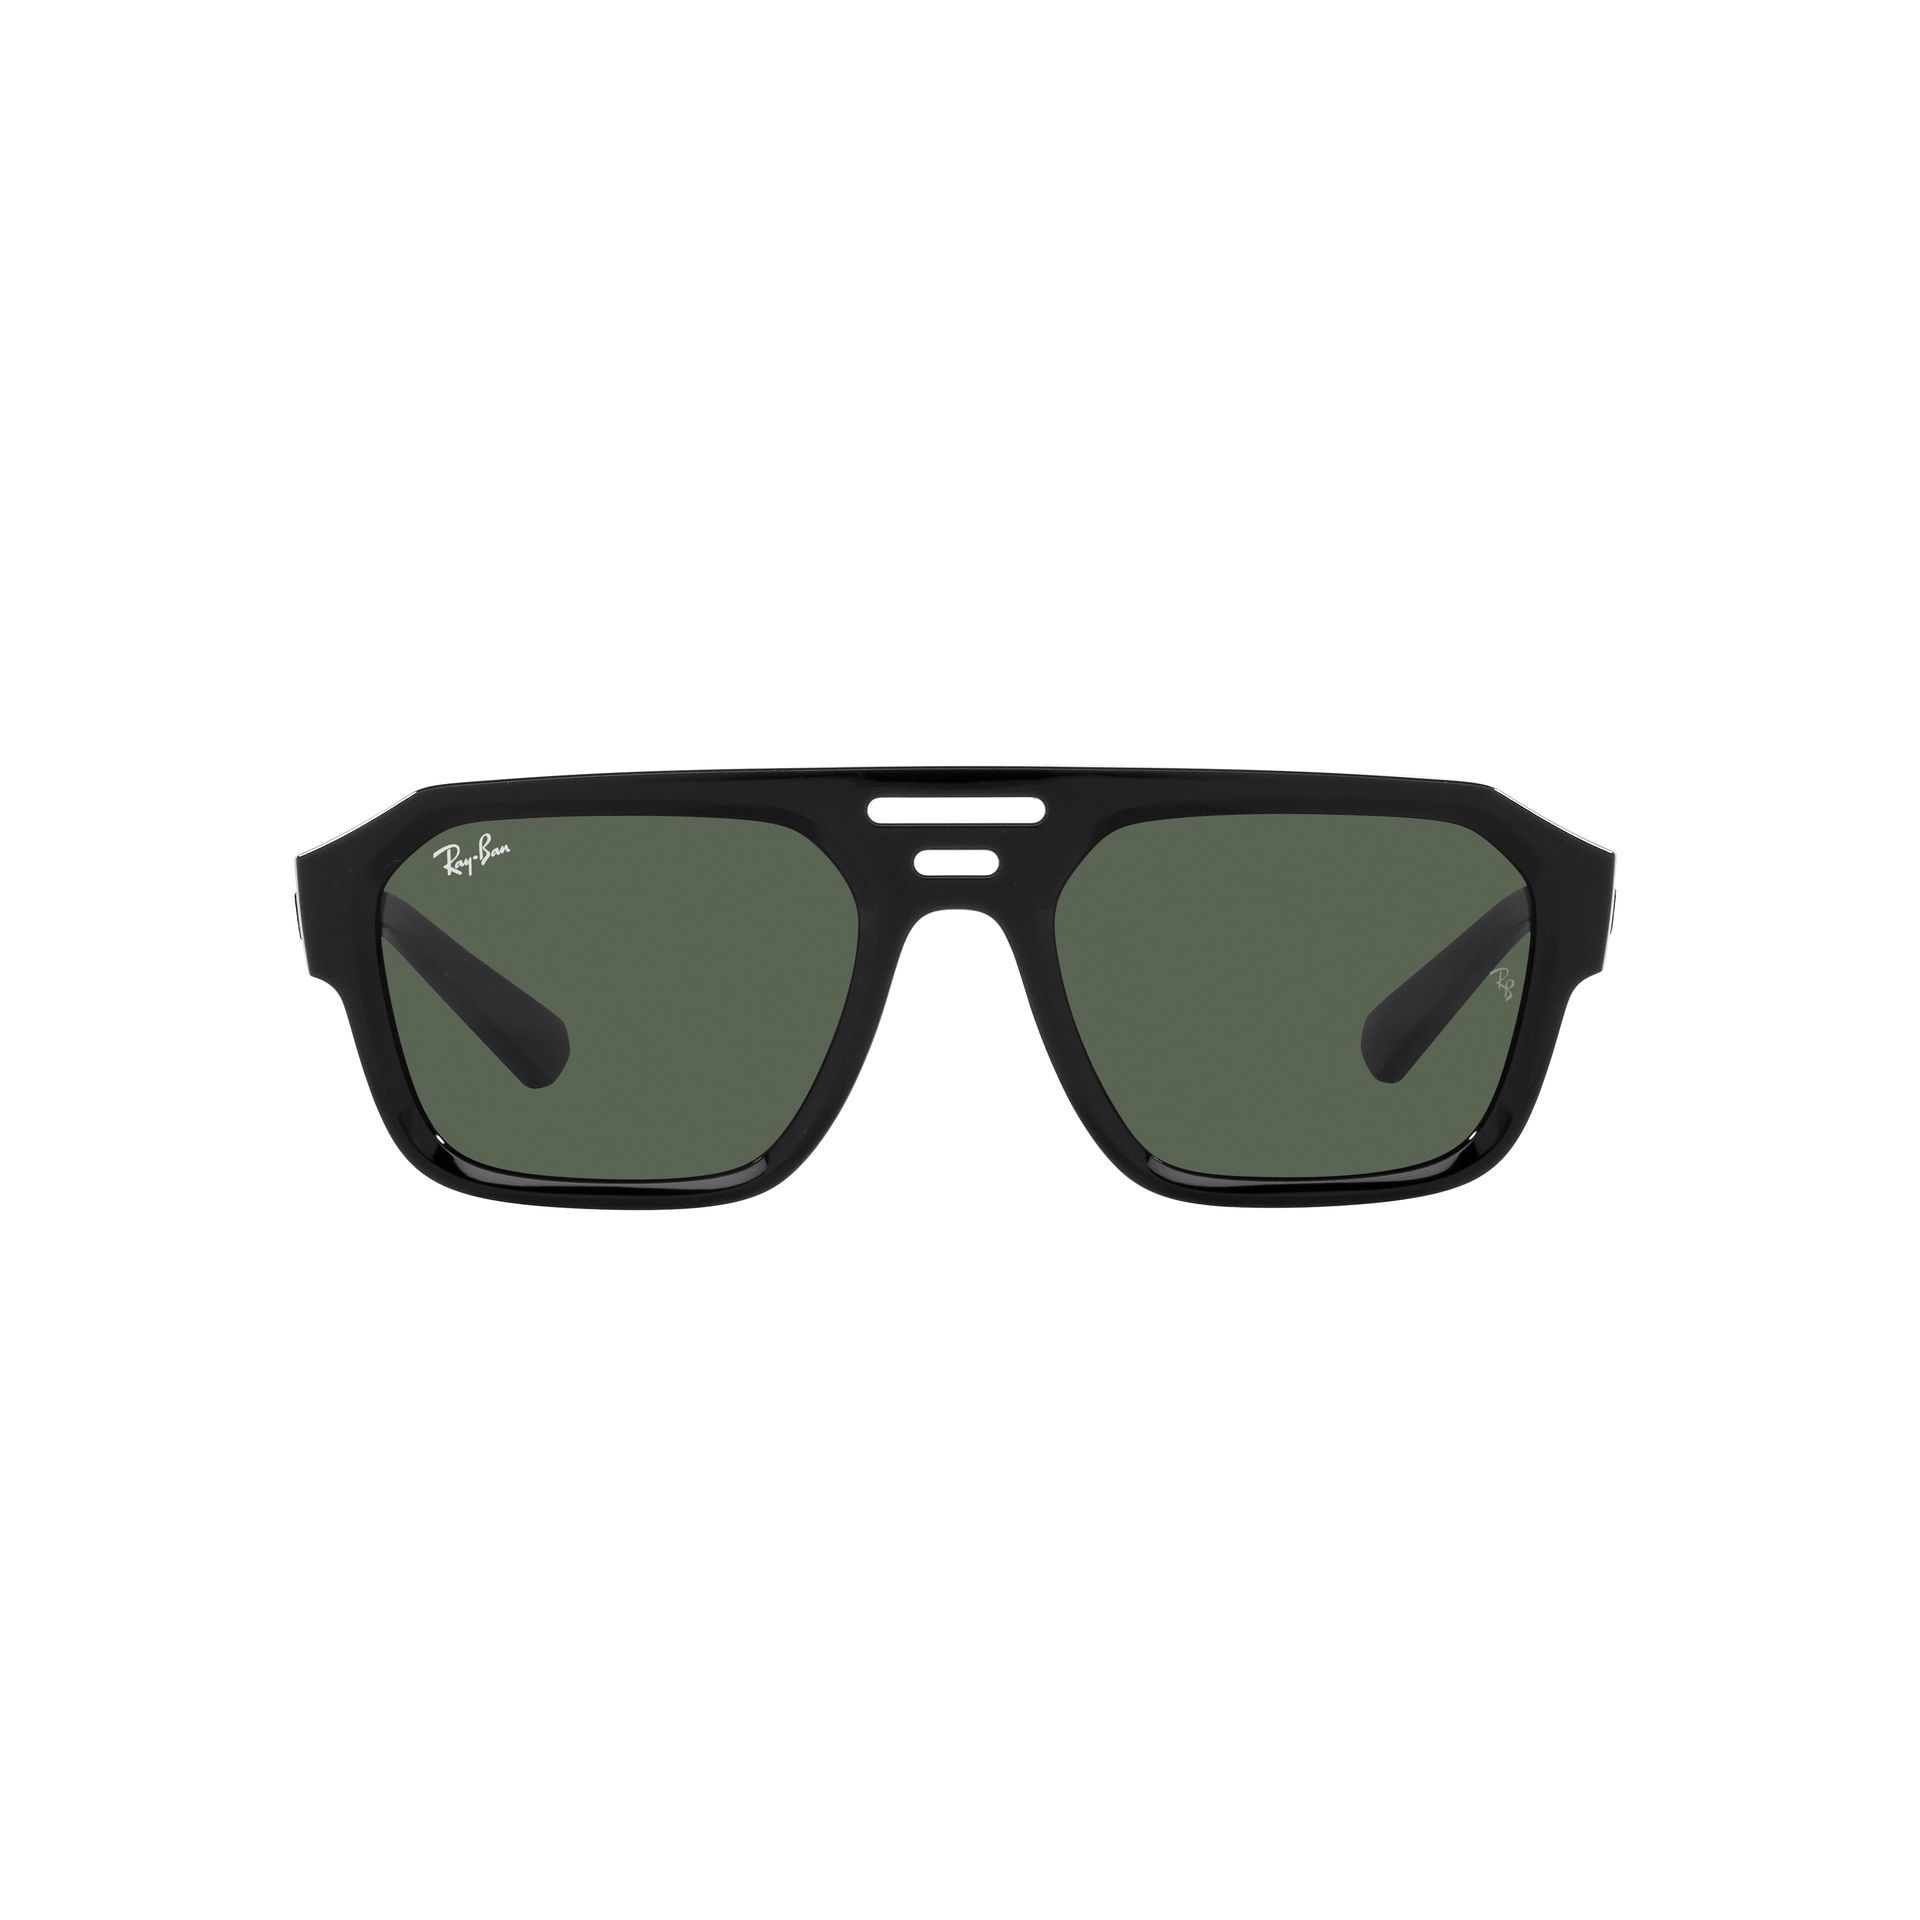 0RB4397 Irregular Sunglasses 667771 - size 54